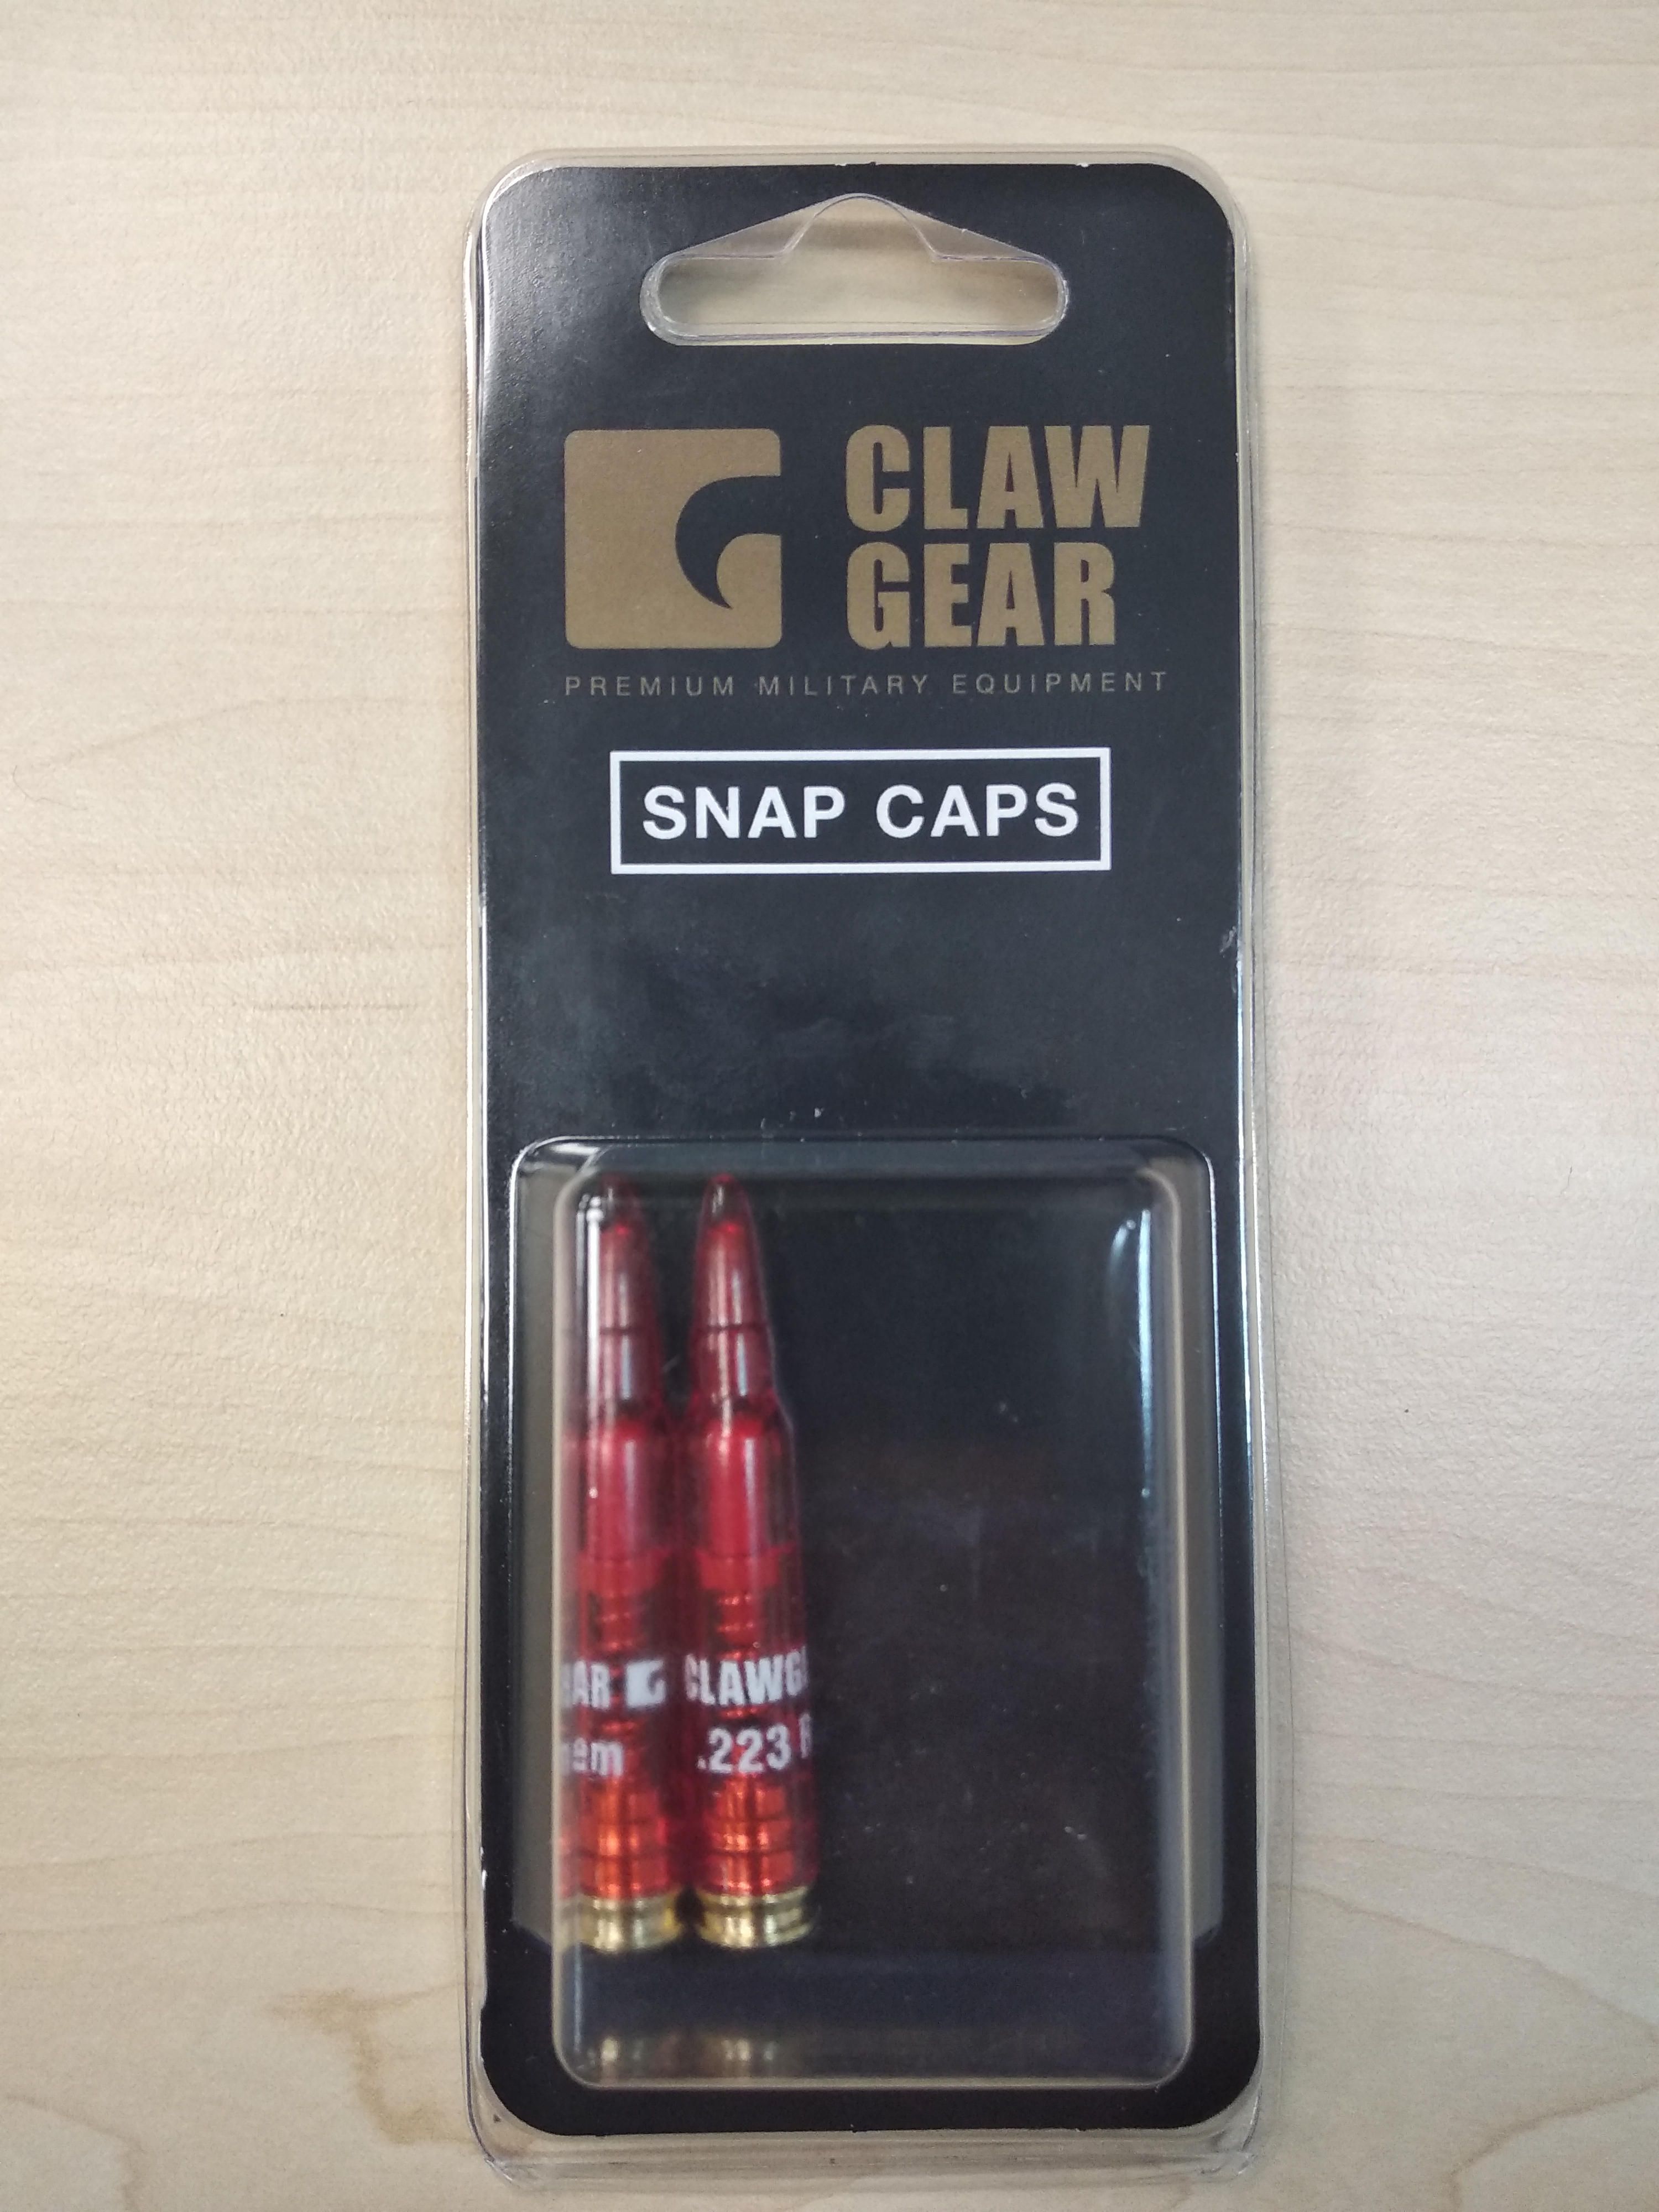 Clawgear cvičné střelivo .223 Rem, snap caps